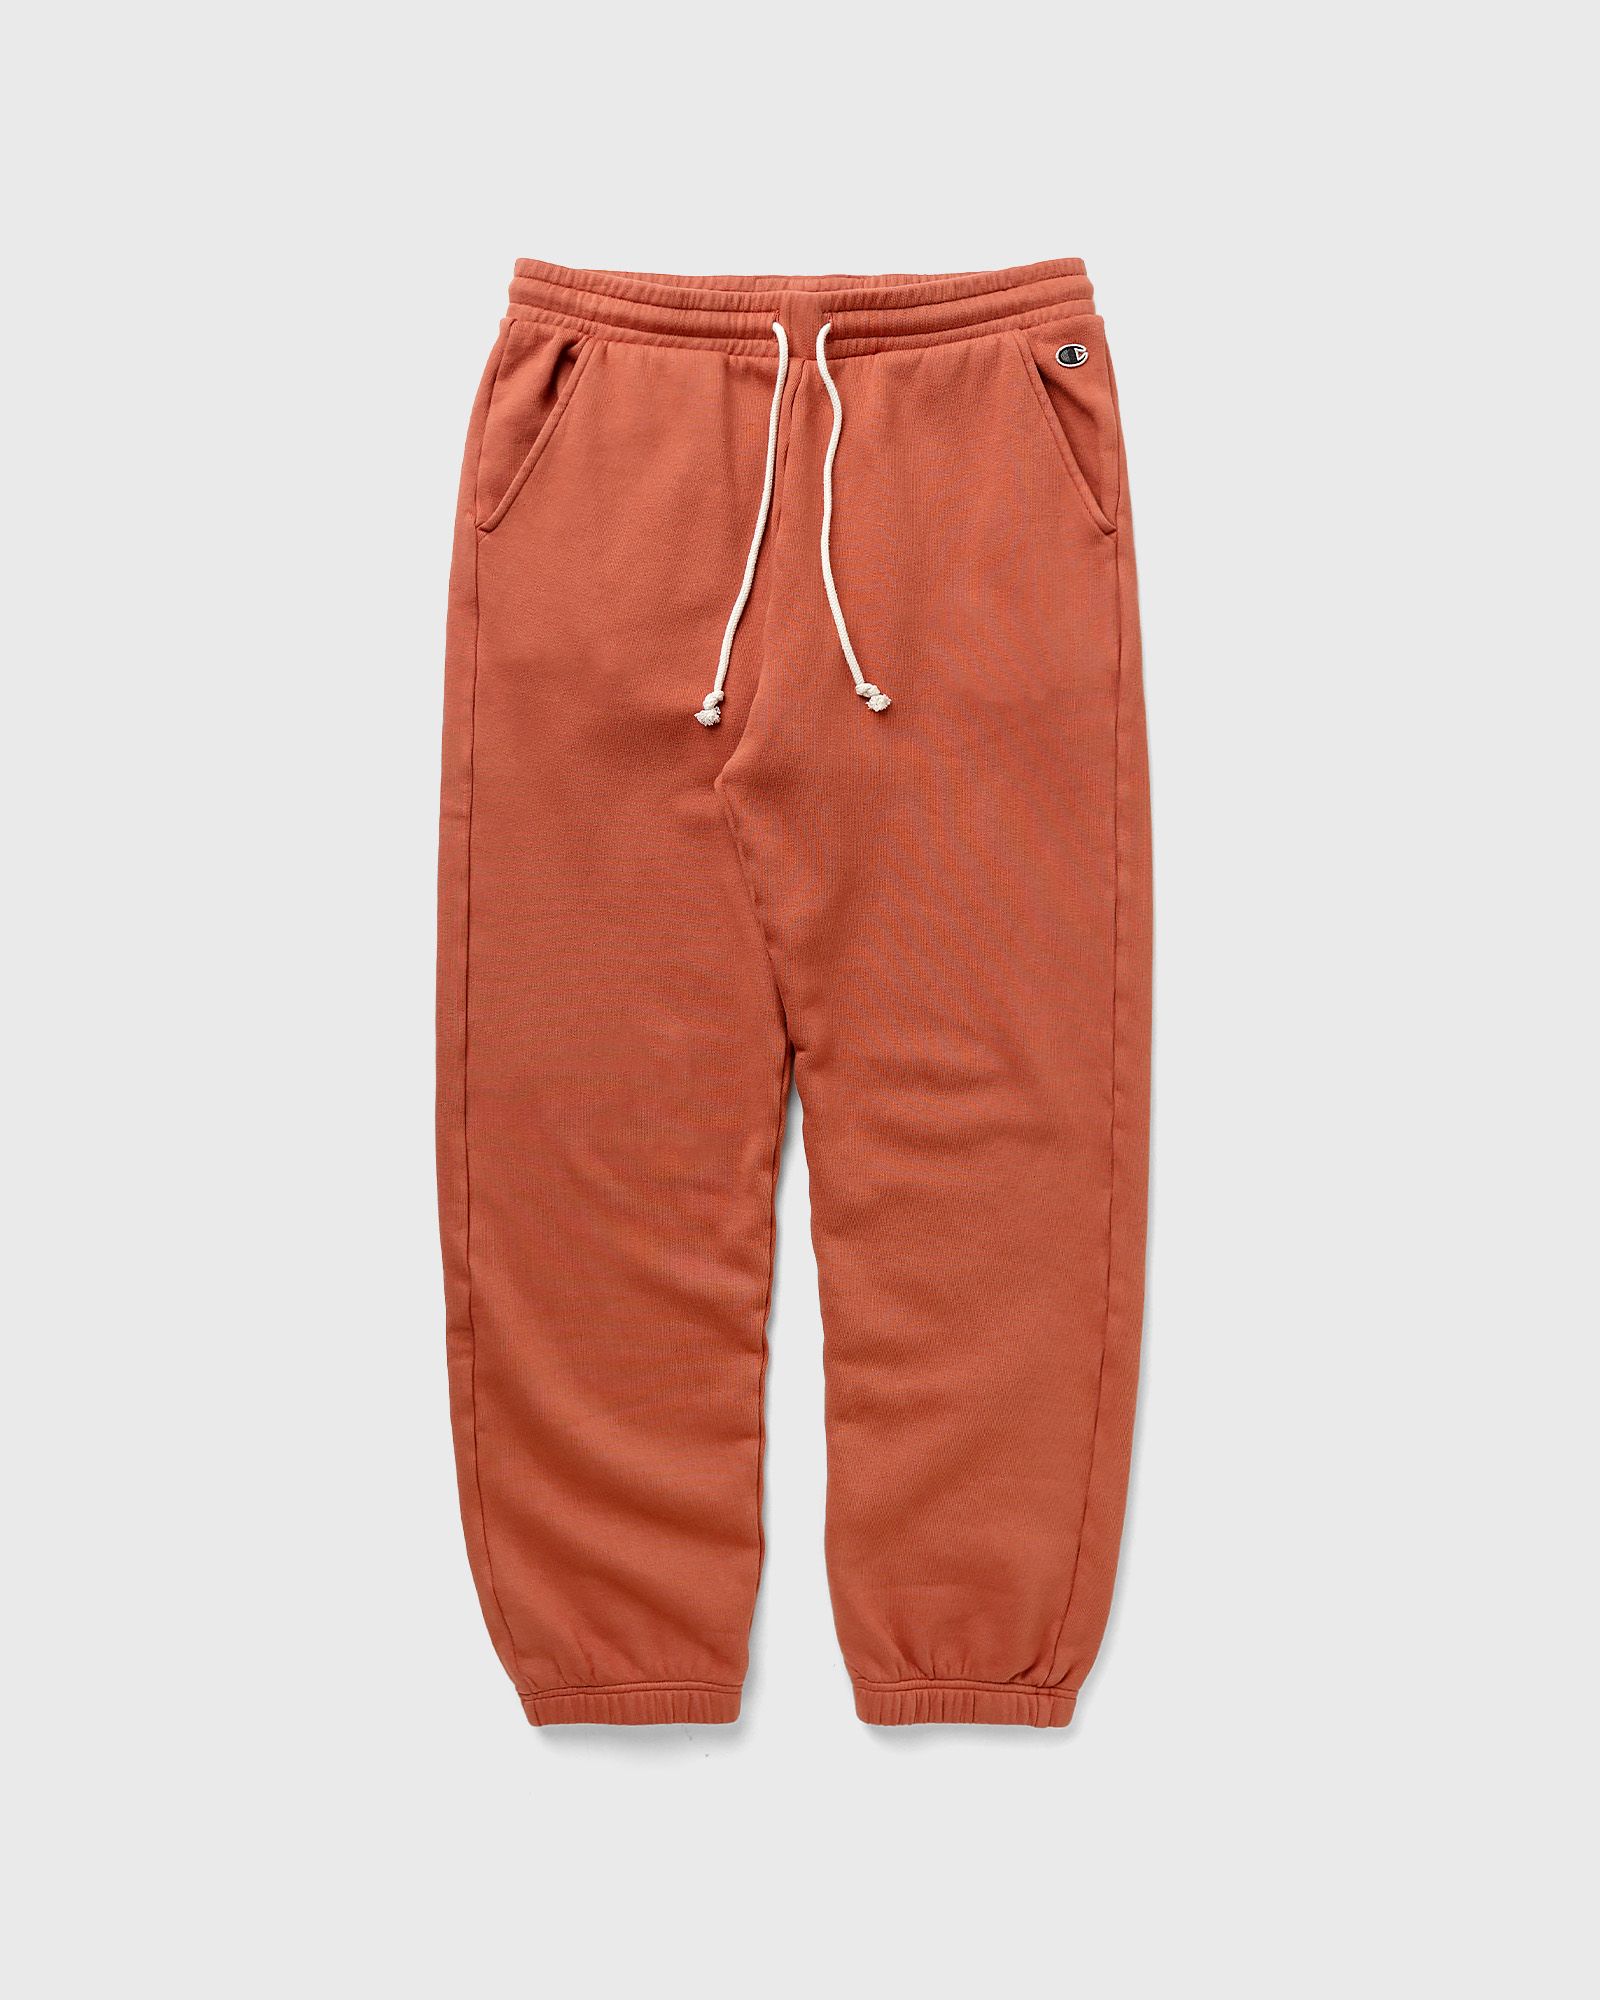 CHAMPION - elastic cuff pants men sweatpants orange in größe:l